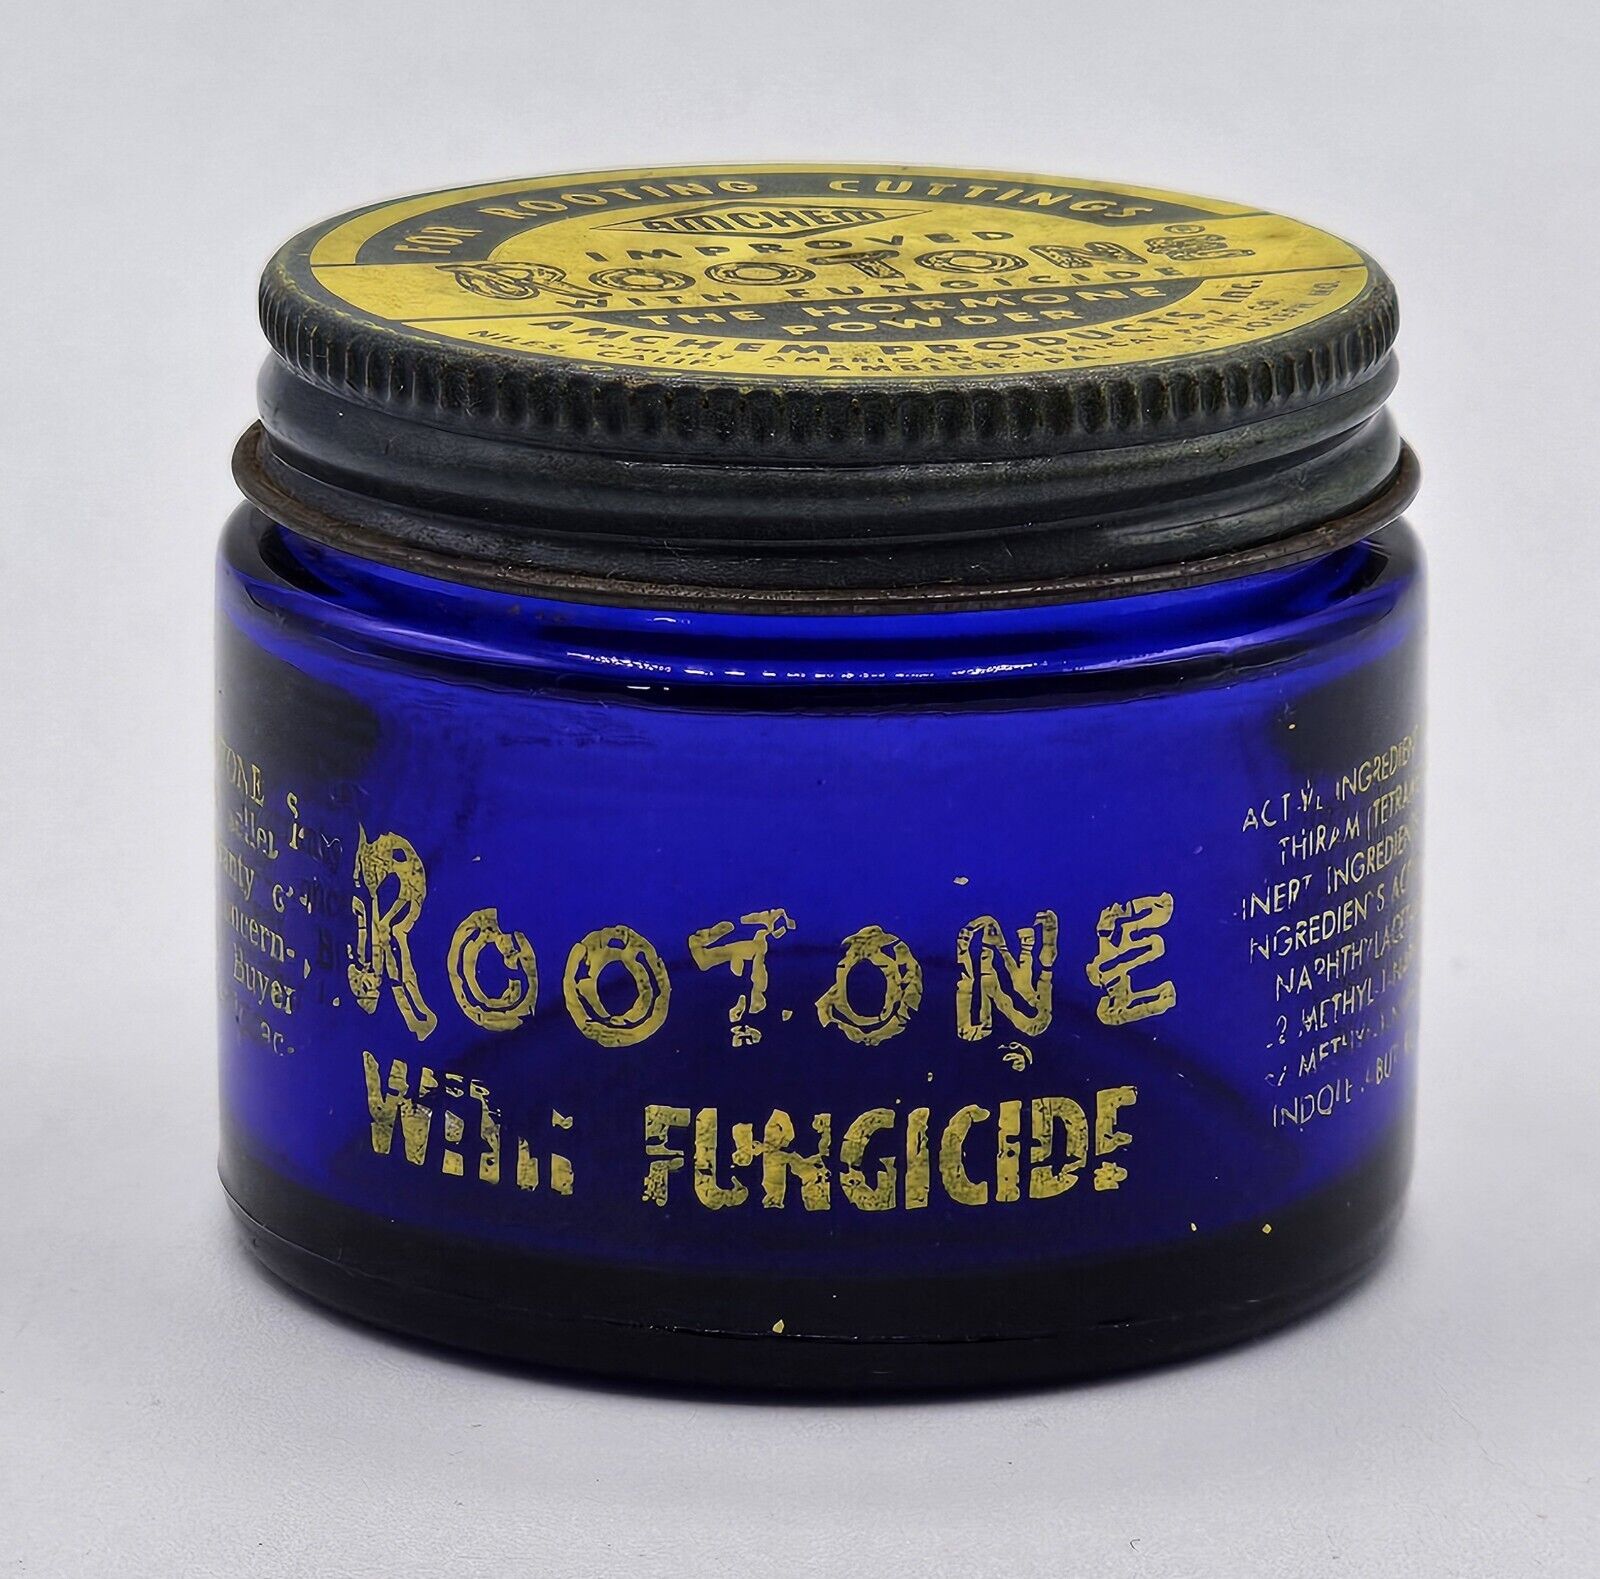 Amchem Vintage Rootone The Hormone Powder Colbalt Blue Glass Jar with Lid Empty